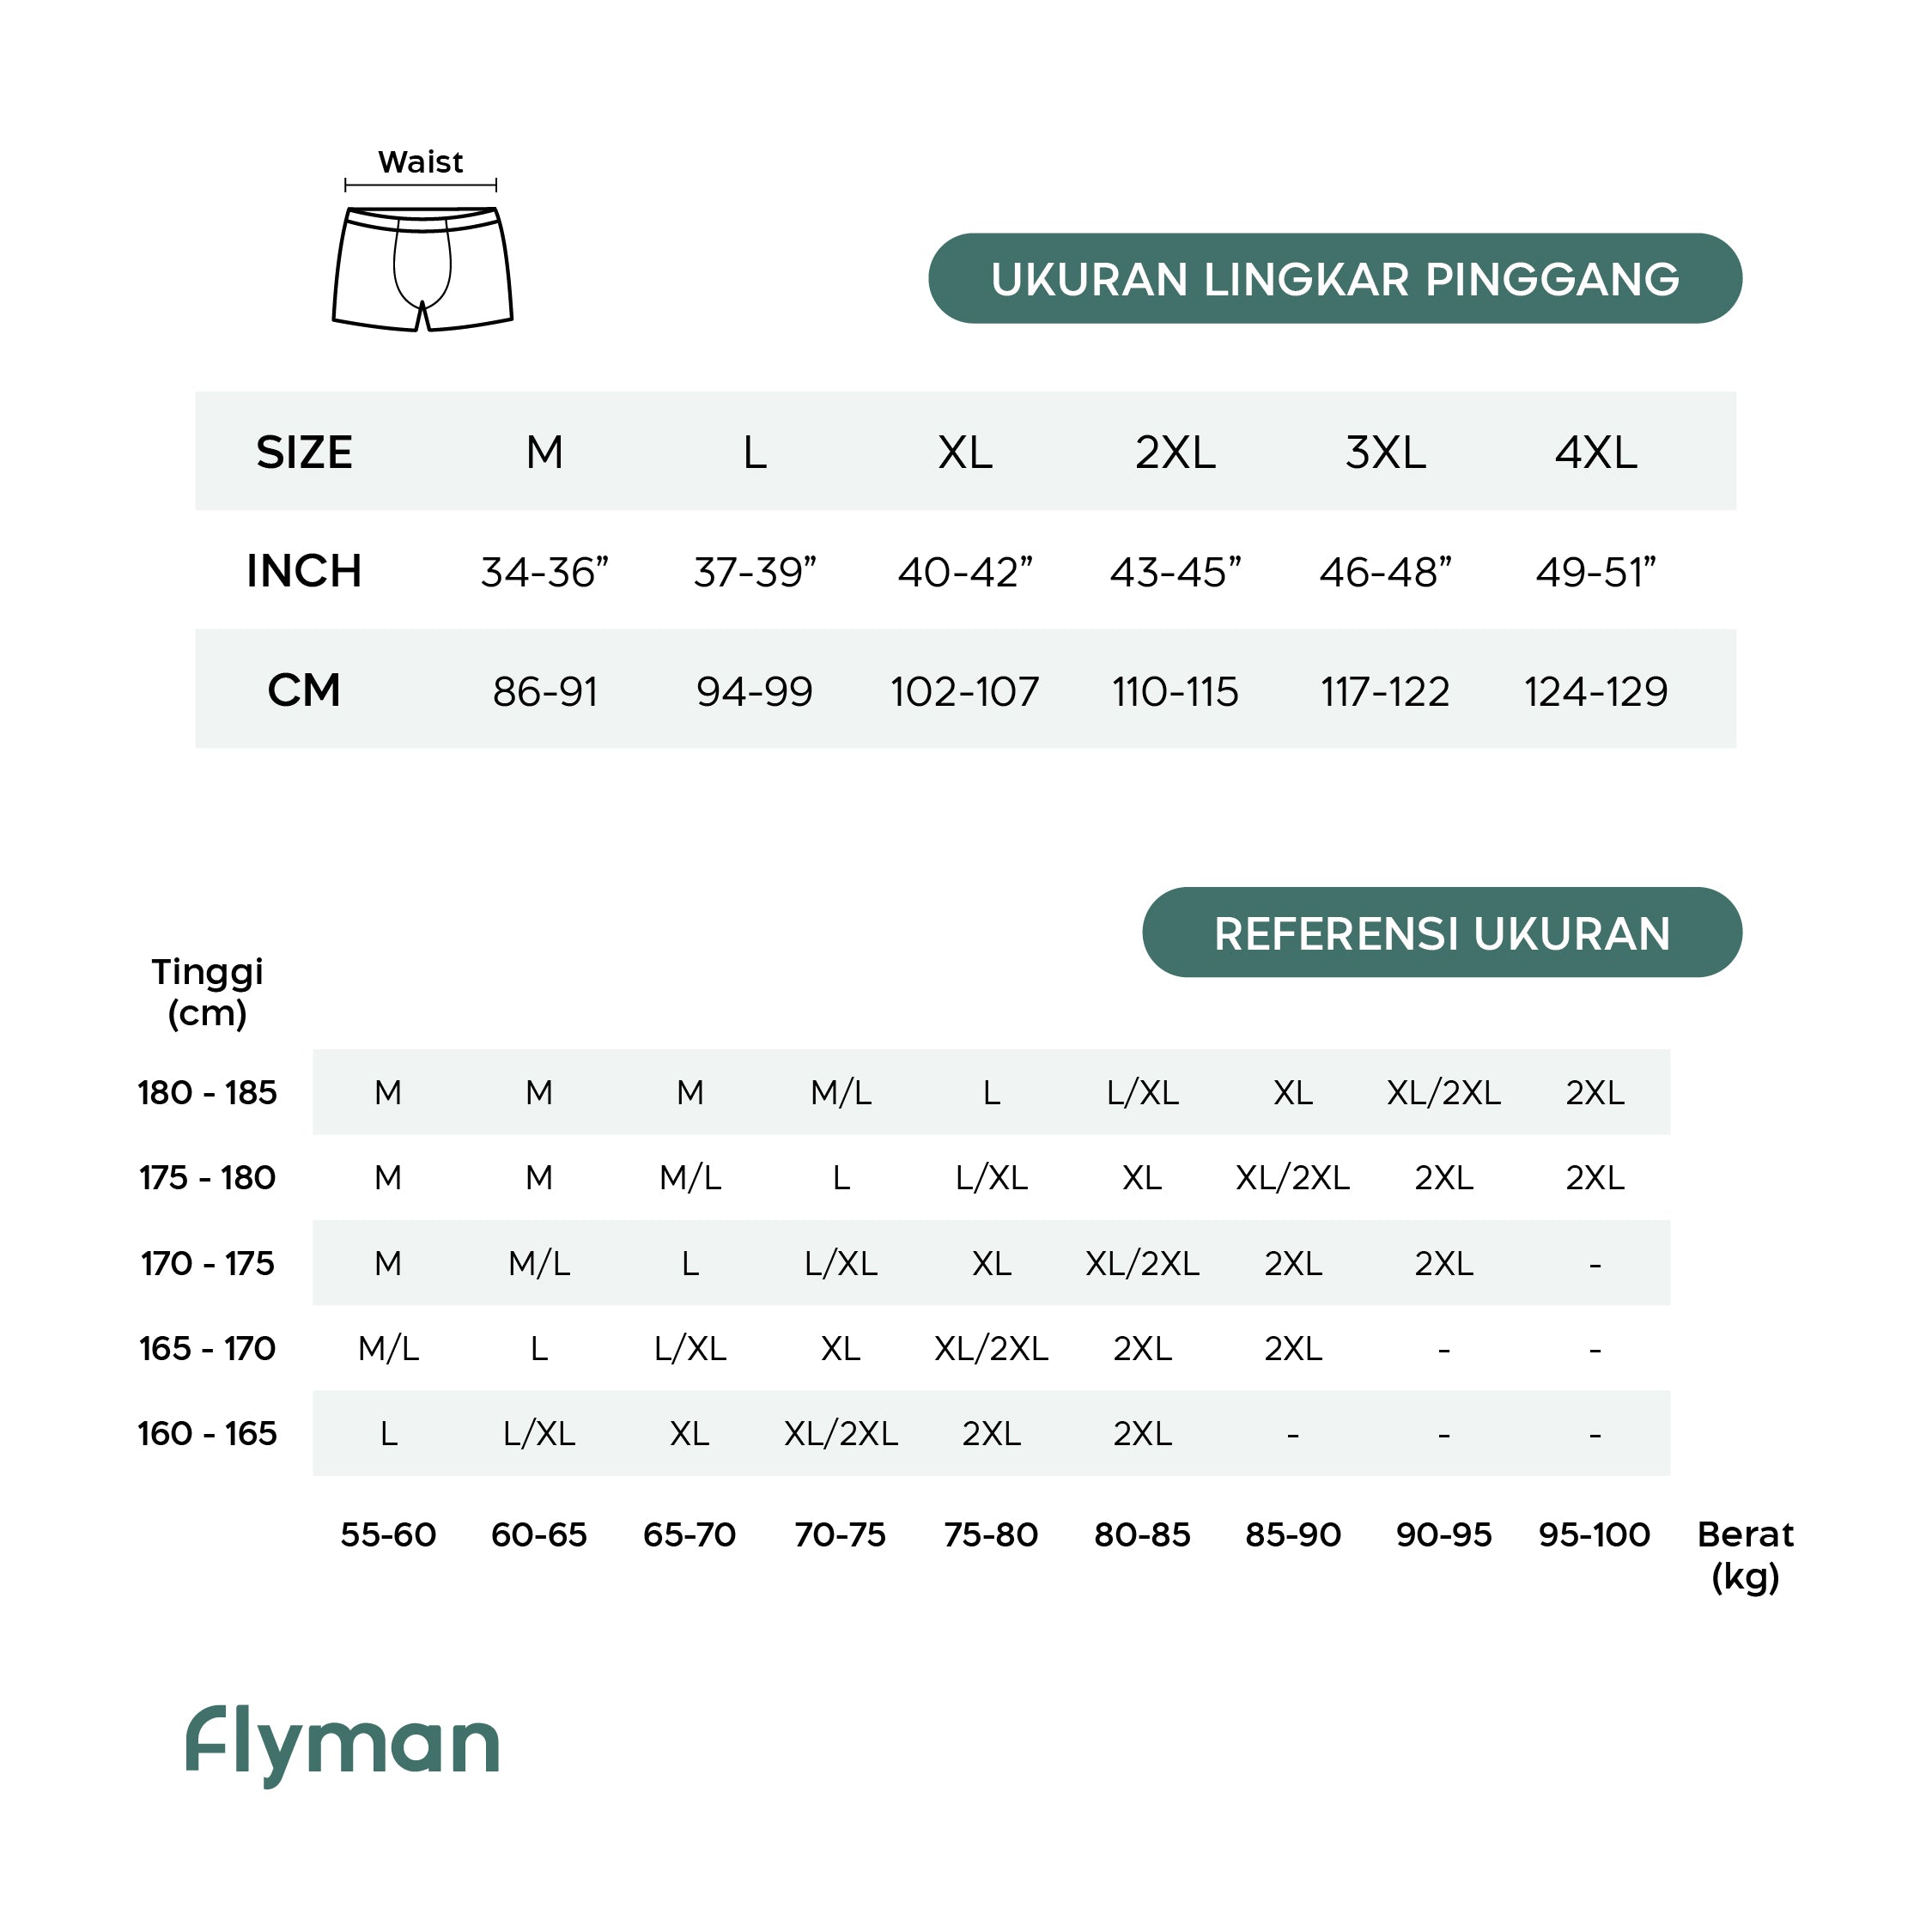 Flyman Celana Dalam Pria Briefs Micro Nylon FM 3455 1 Pcs